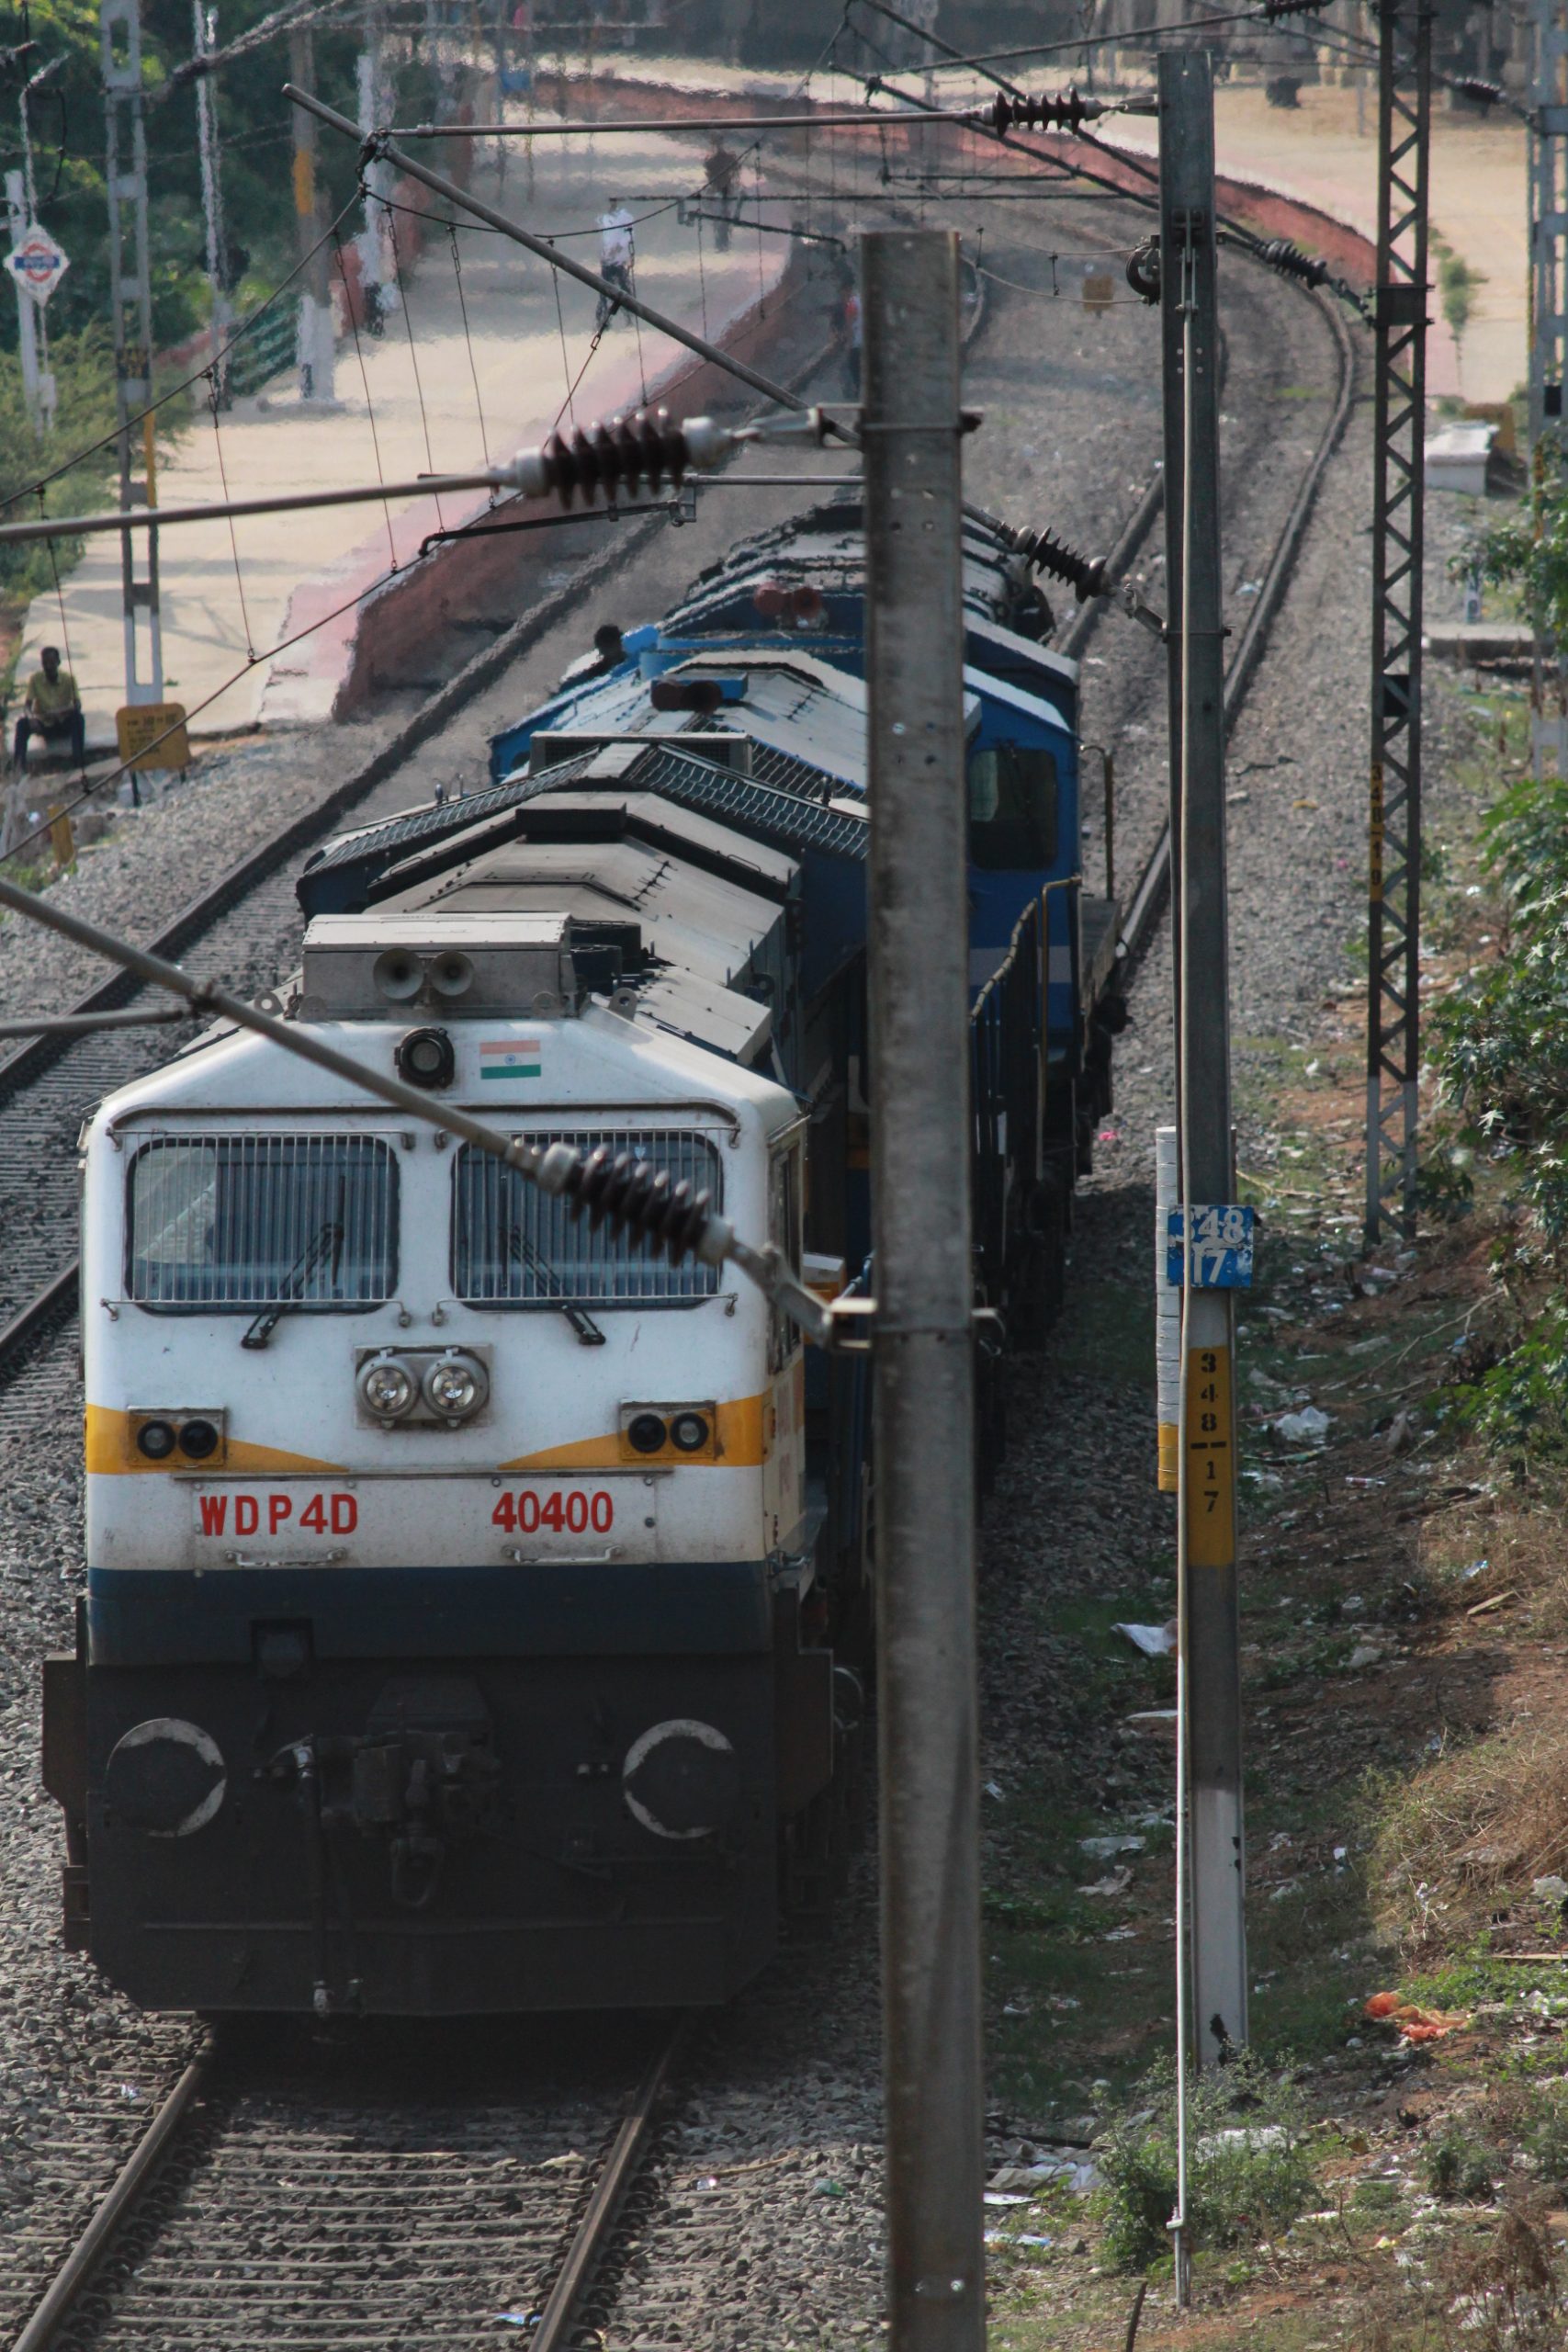 Train engine on the railway track